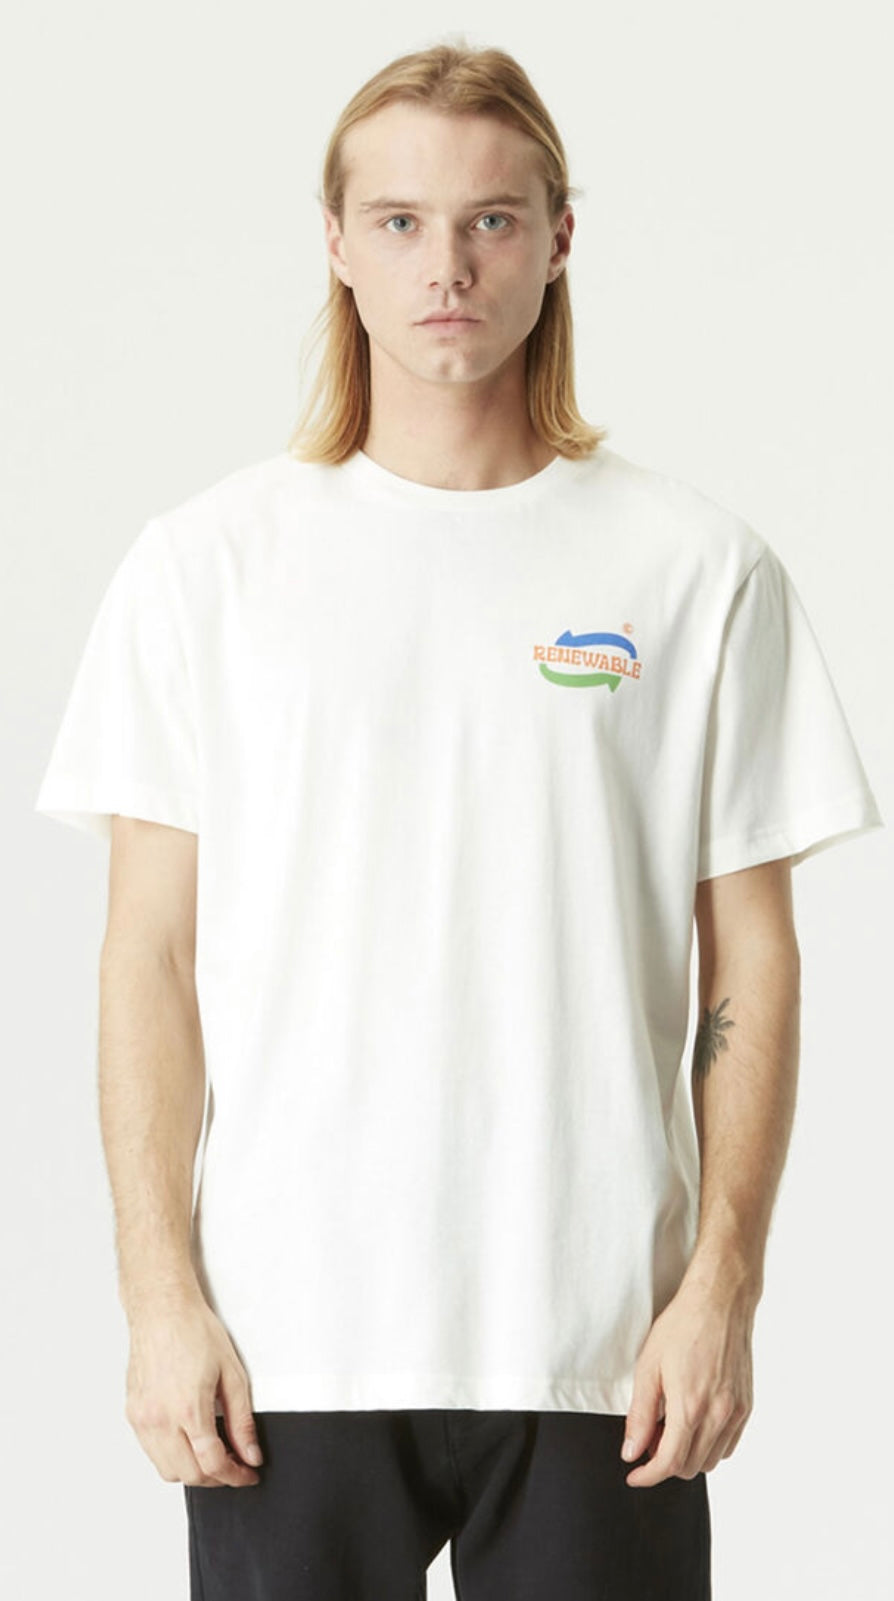 T-shirt cc renewable Tee